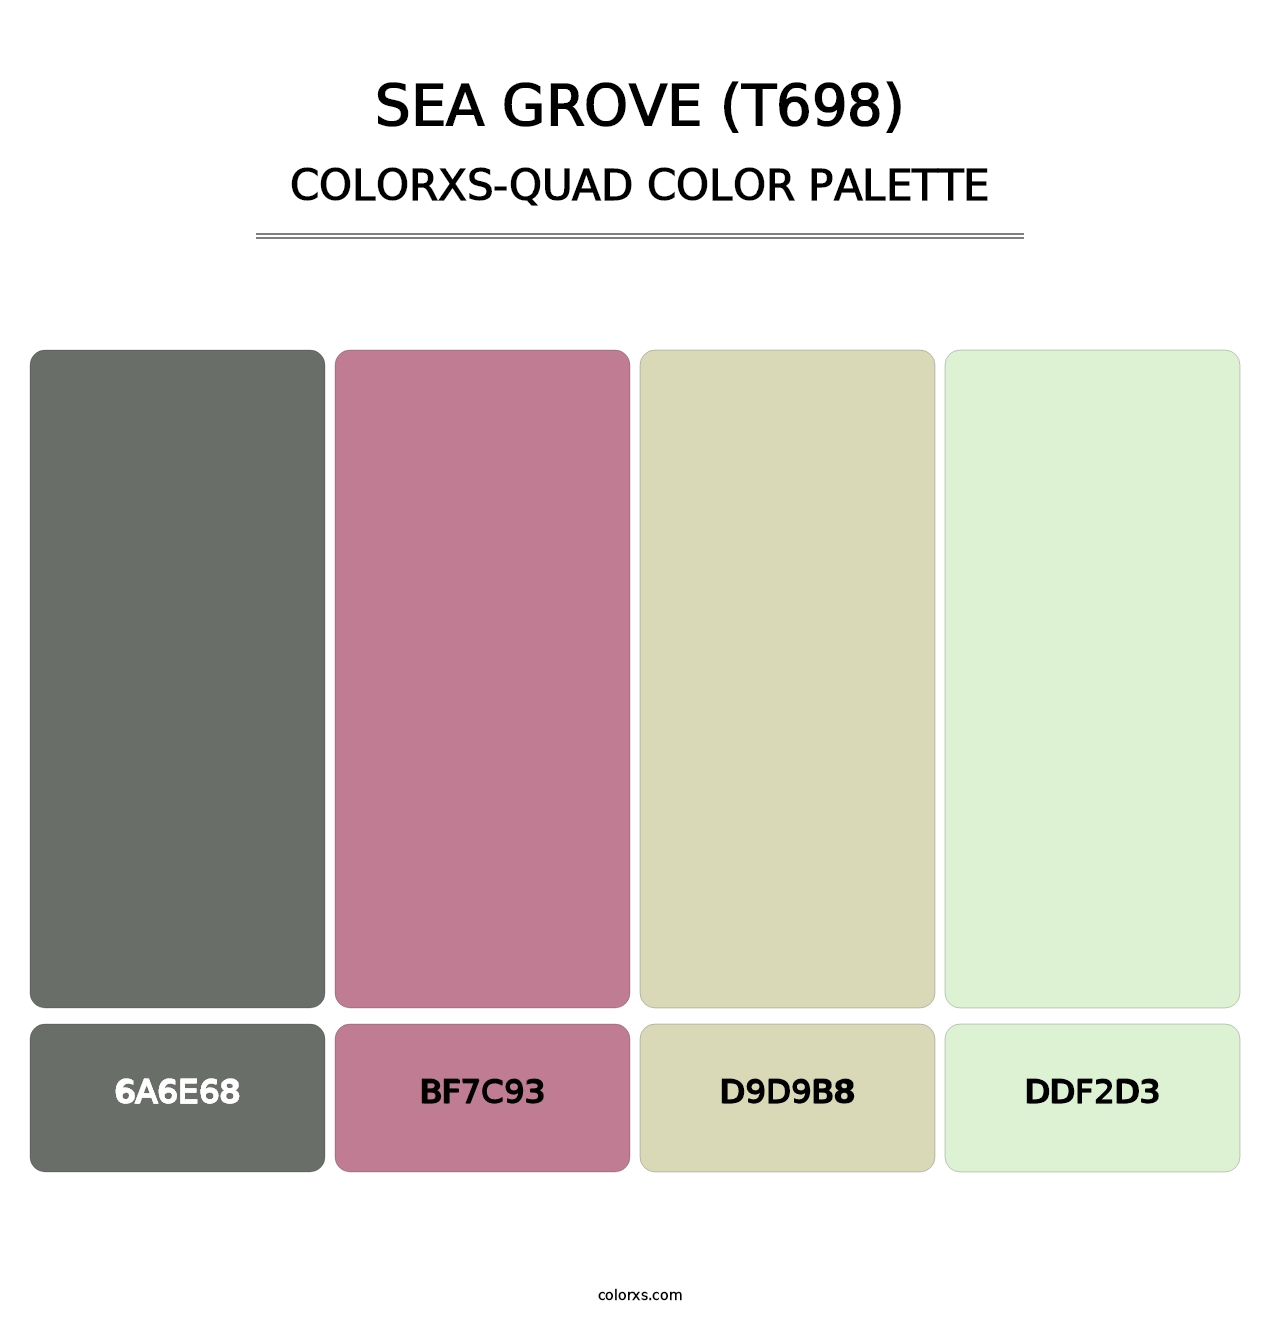 Sea Grove (T698) - Colorxs Quad Palette